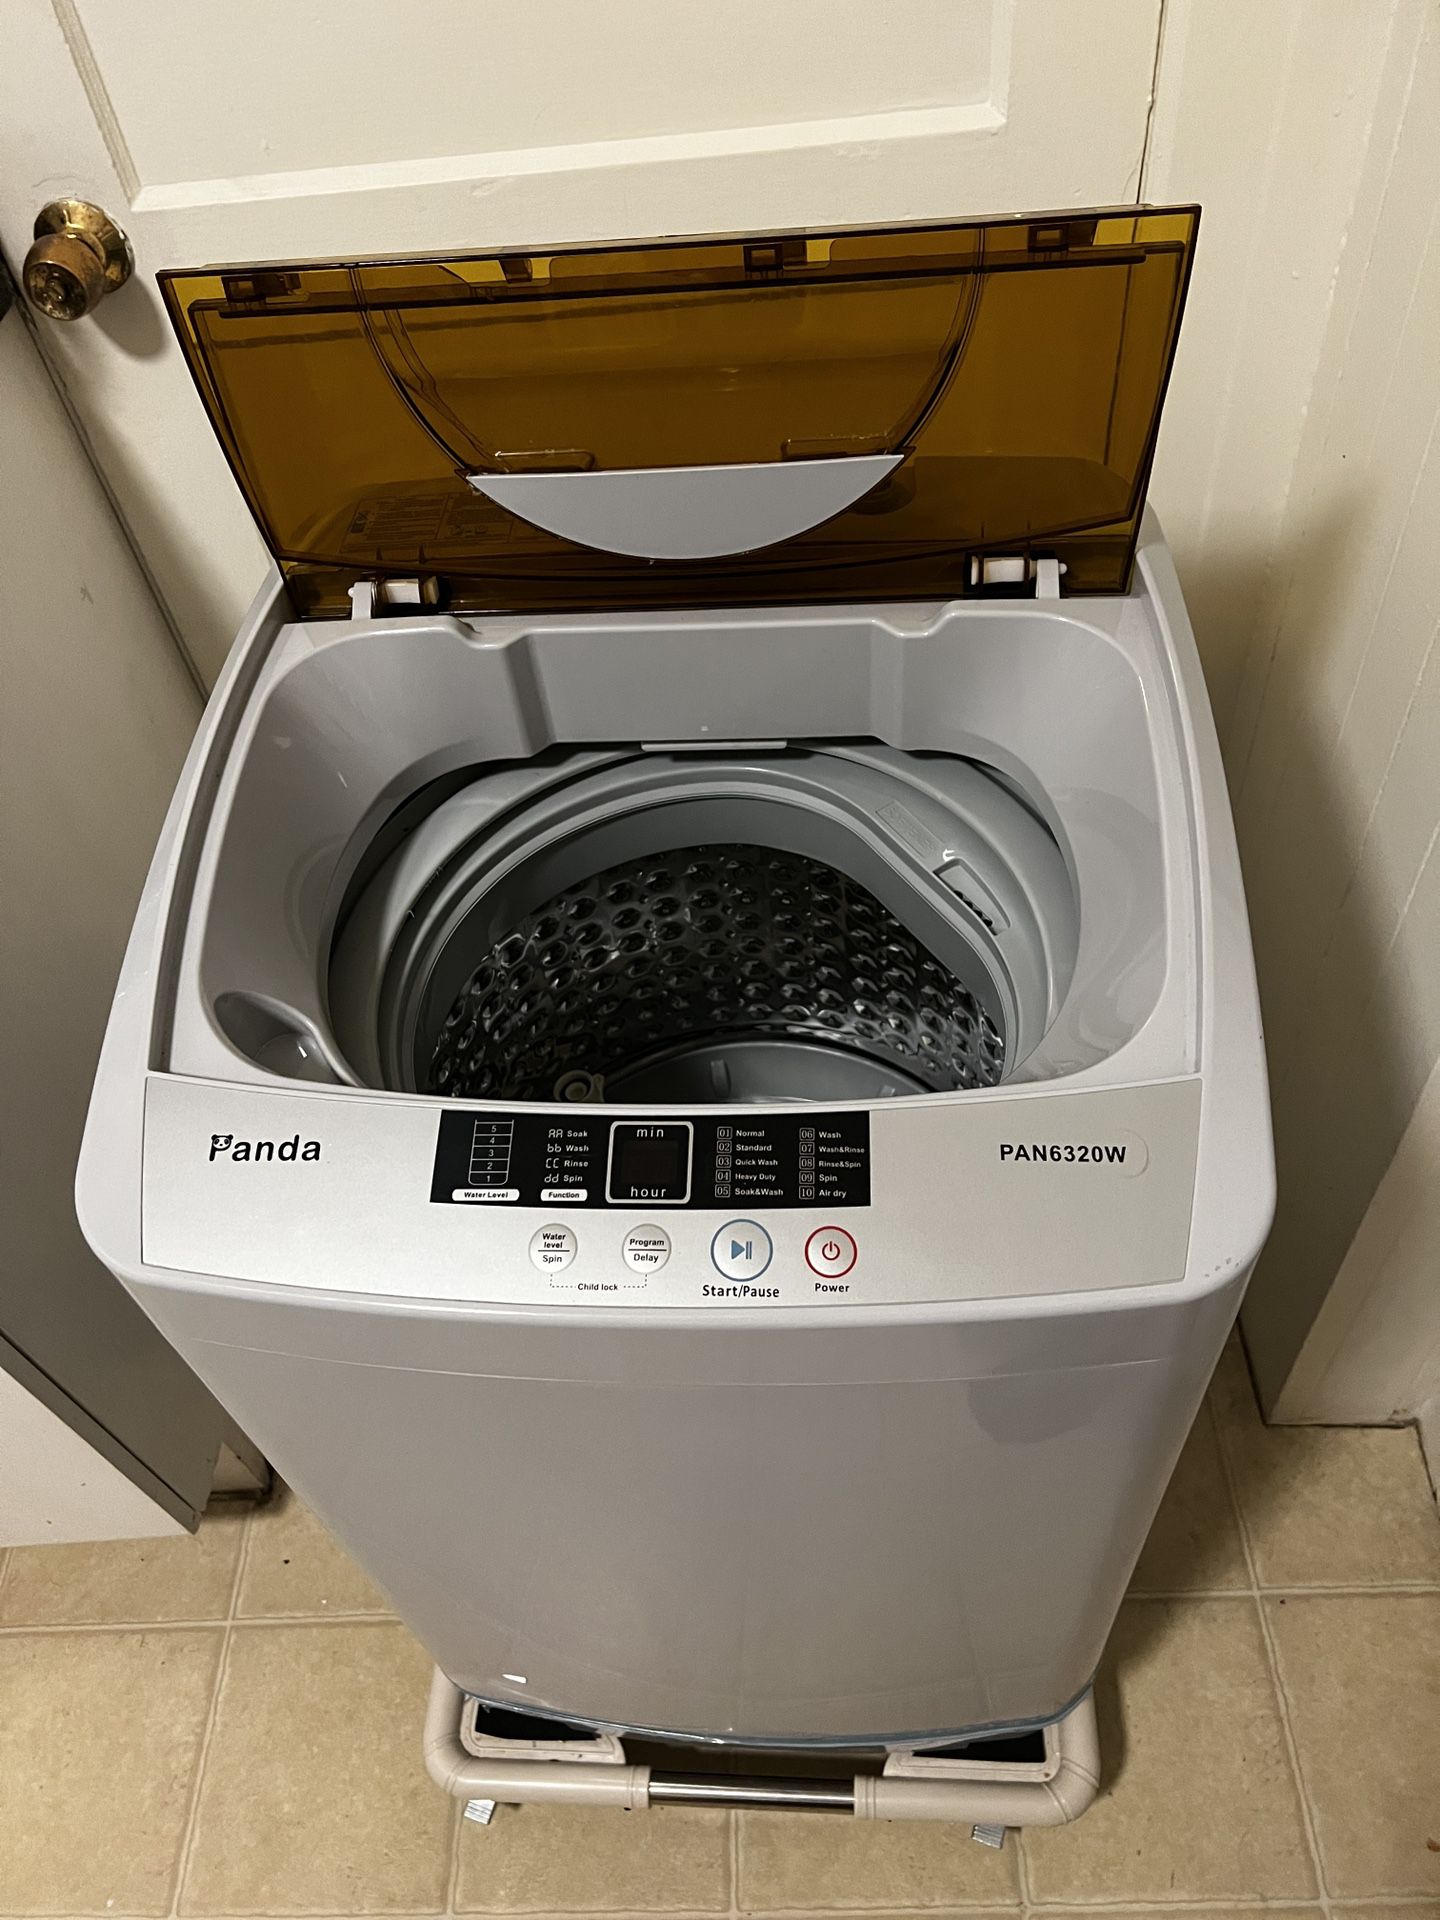 Portable Washing Machine for Sale in Suprstitn Mountain, AZ - OfferUp